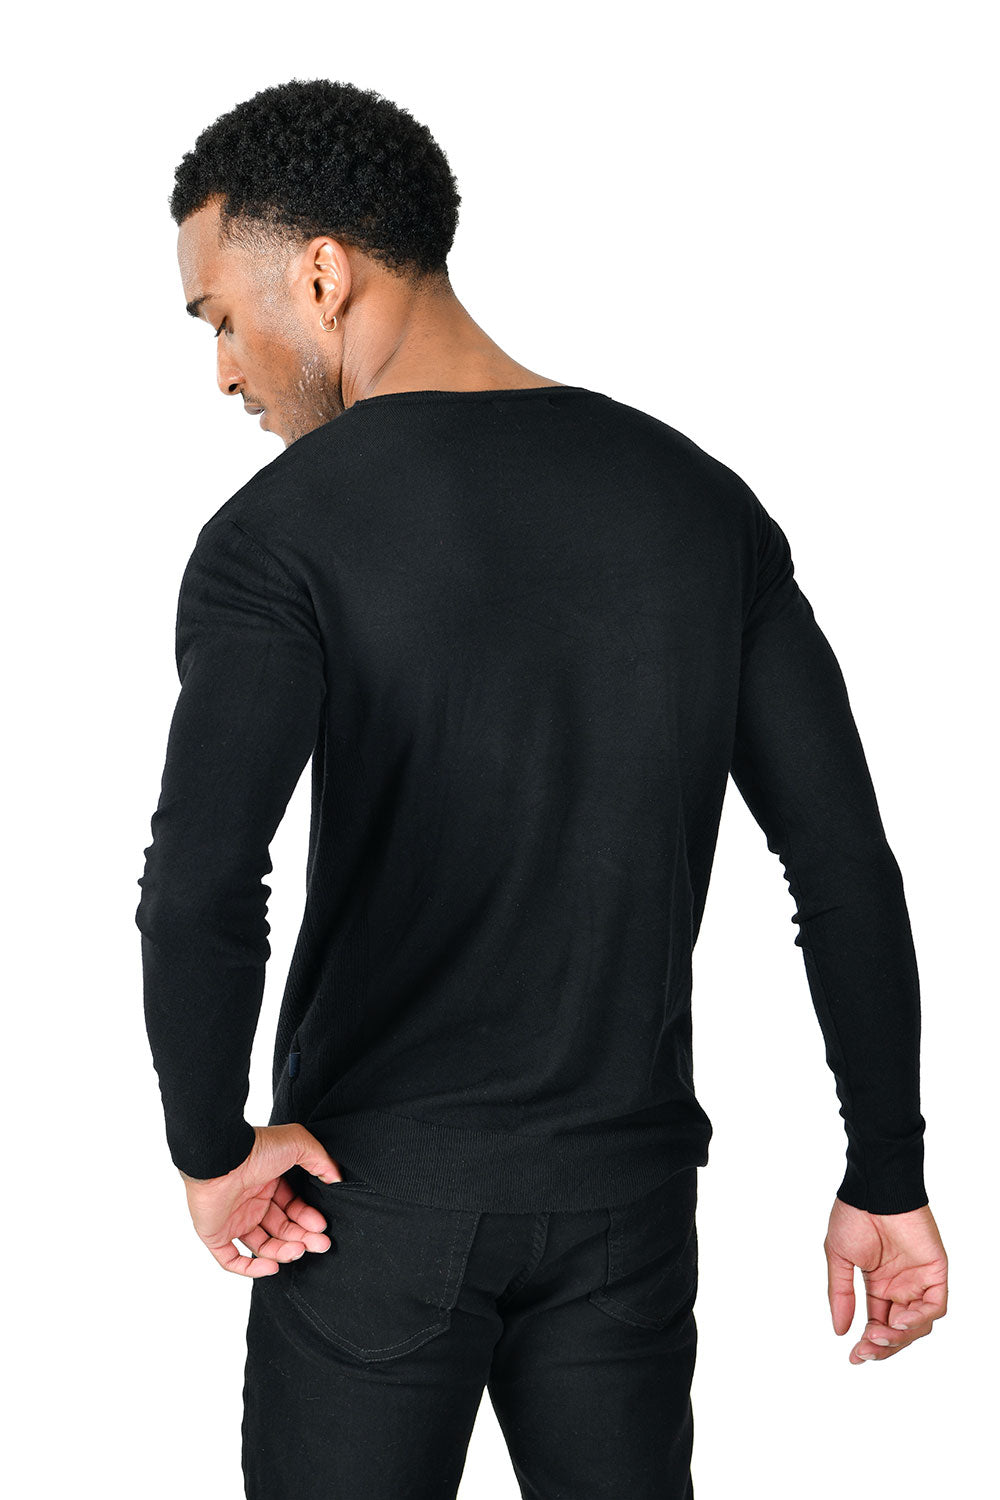 BARABAS Men's Crew Neck Ribbed Solid Color Basic Sweater LS2101 Black